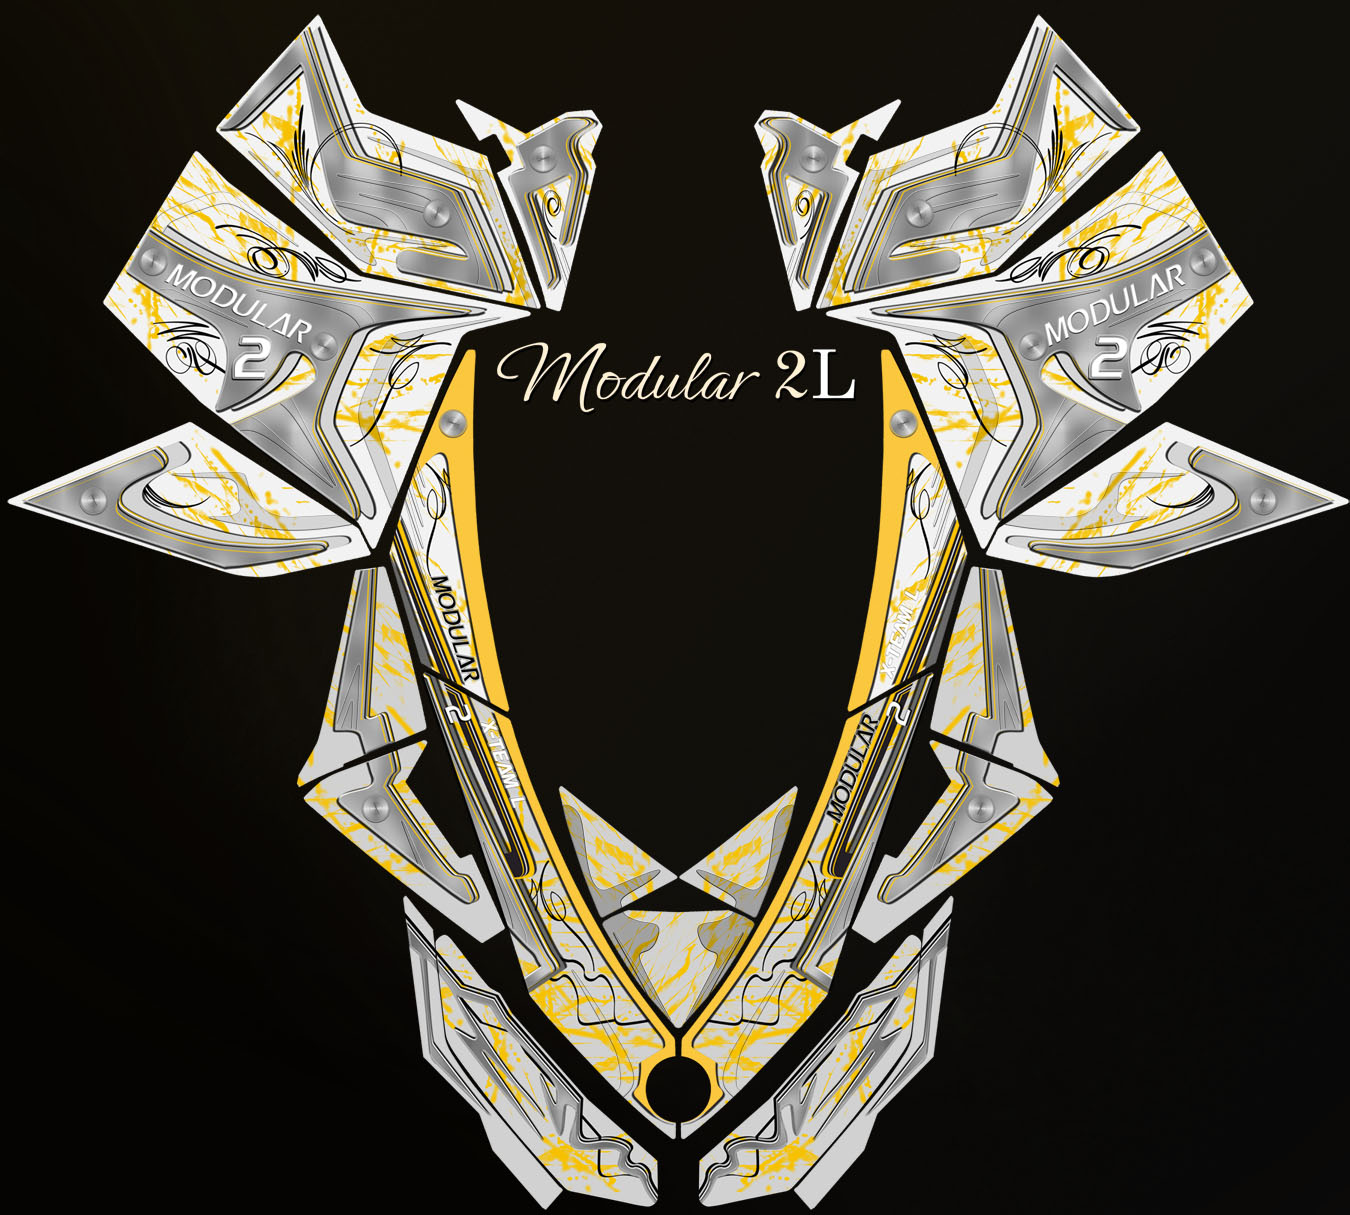 modular 2l gold skidoo graphic